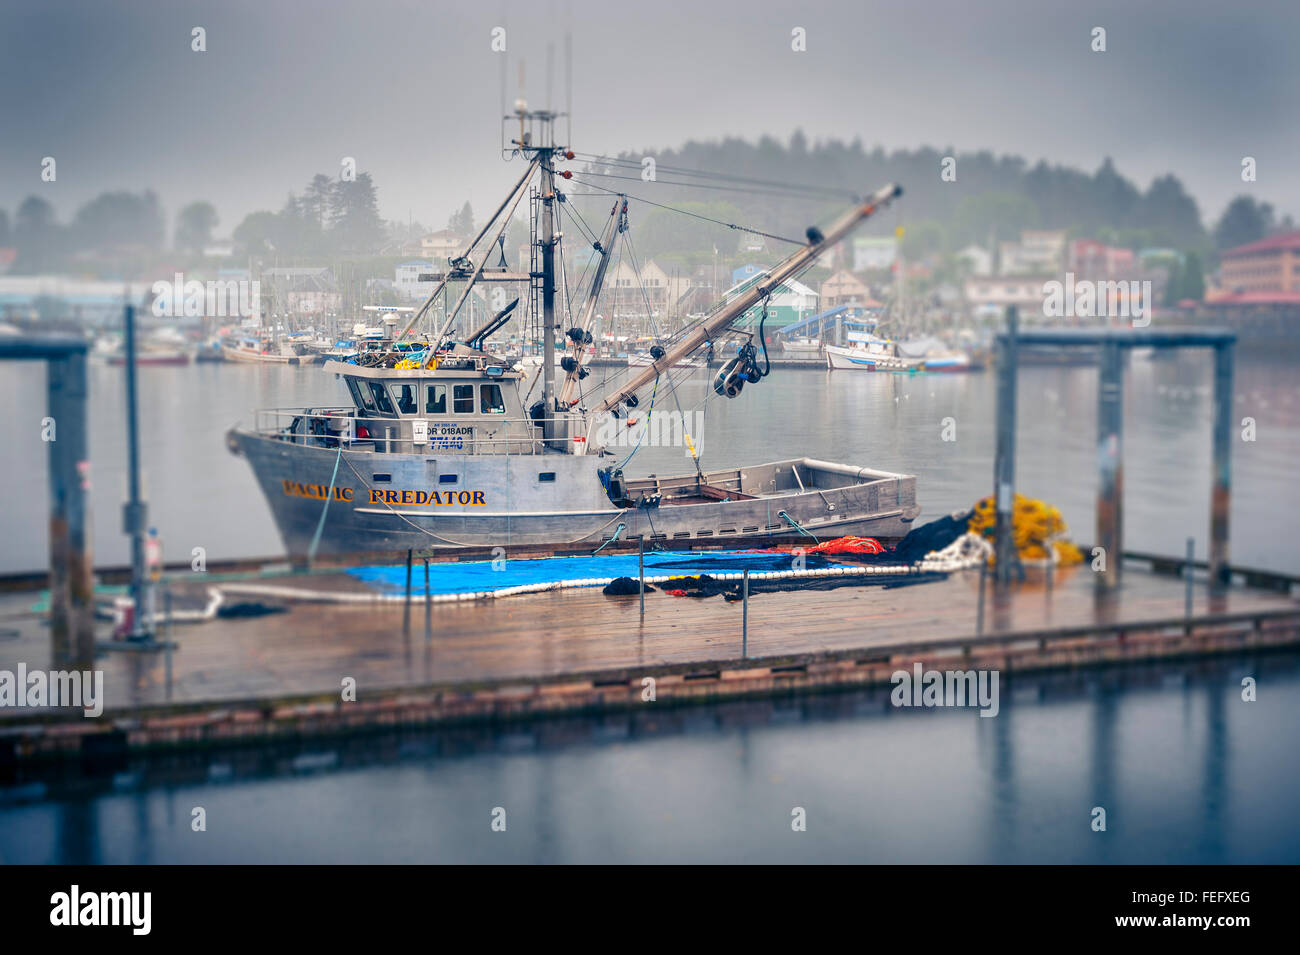 Purse seiner, Pacific Predator tied up at work platform in Sitka harbor in Sitka, Alaska, USA. Stock Photo